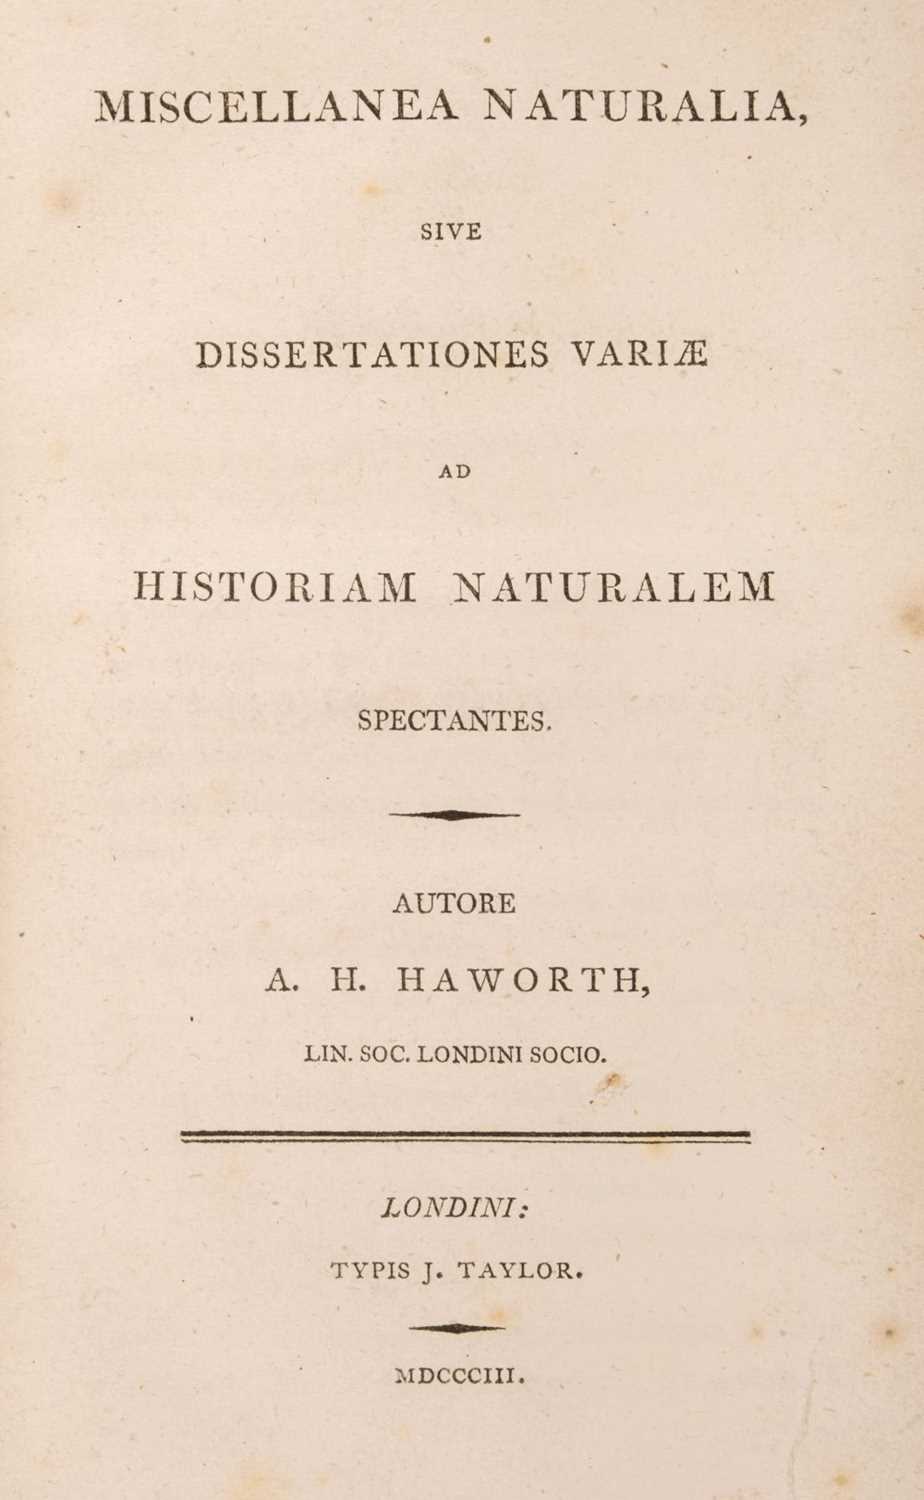 Lot 102 - Haworth (Adrian Hardy). Miscellanea Naturalia, sive dissertationes variae, 1803